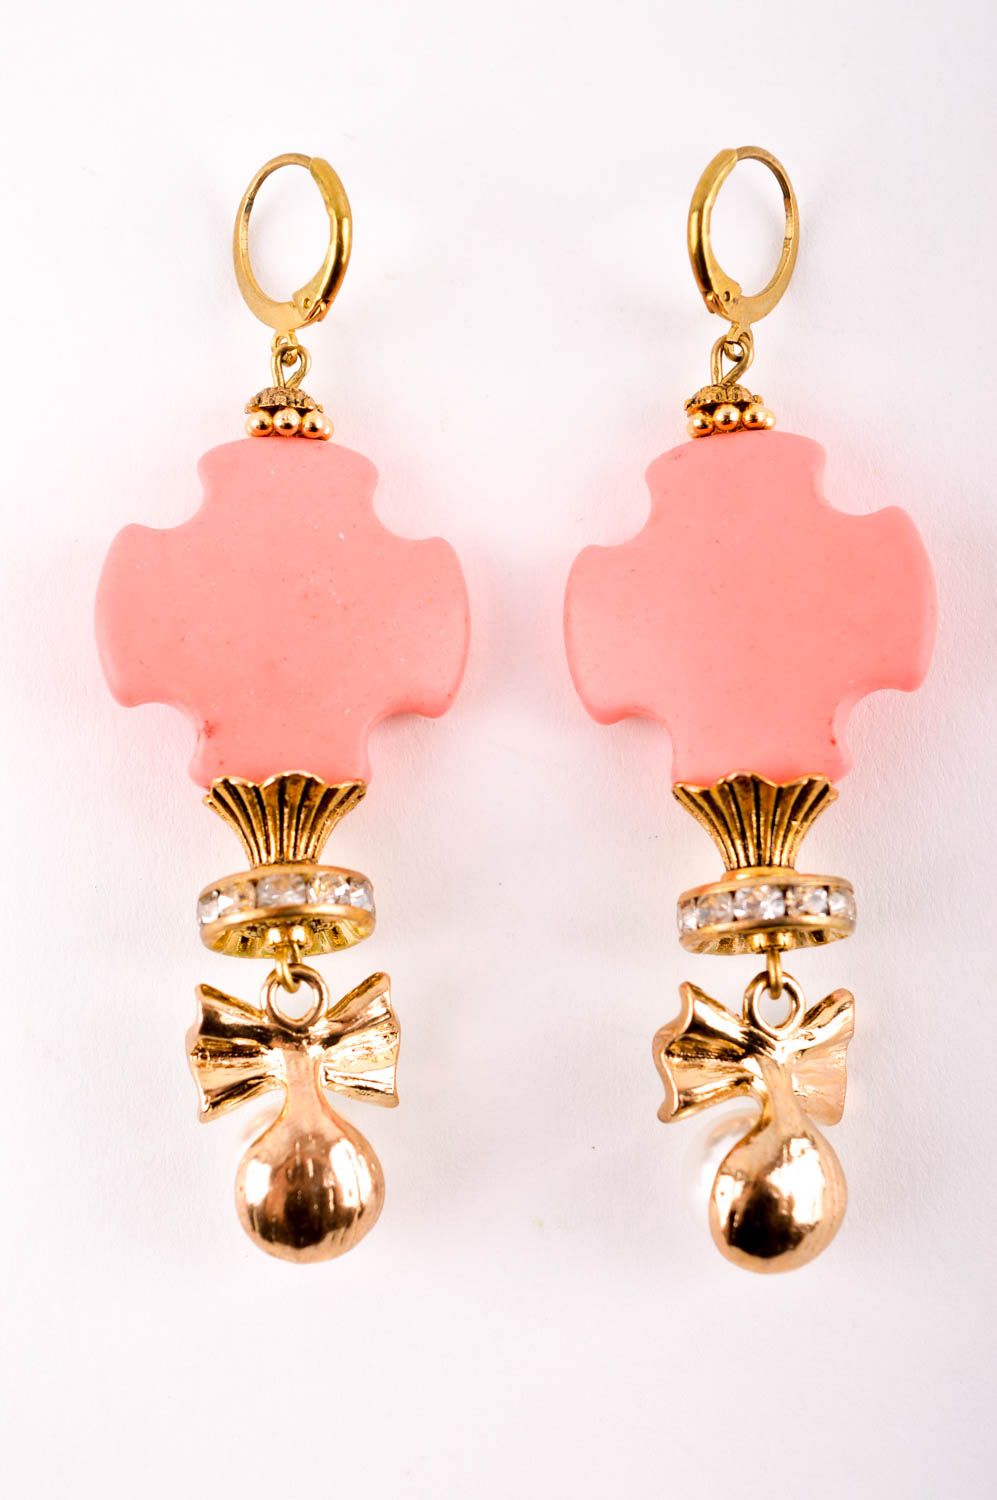 Handmade earrings designer earrings with charms pearl earrings for women photo 4